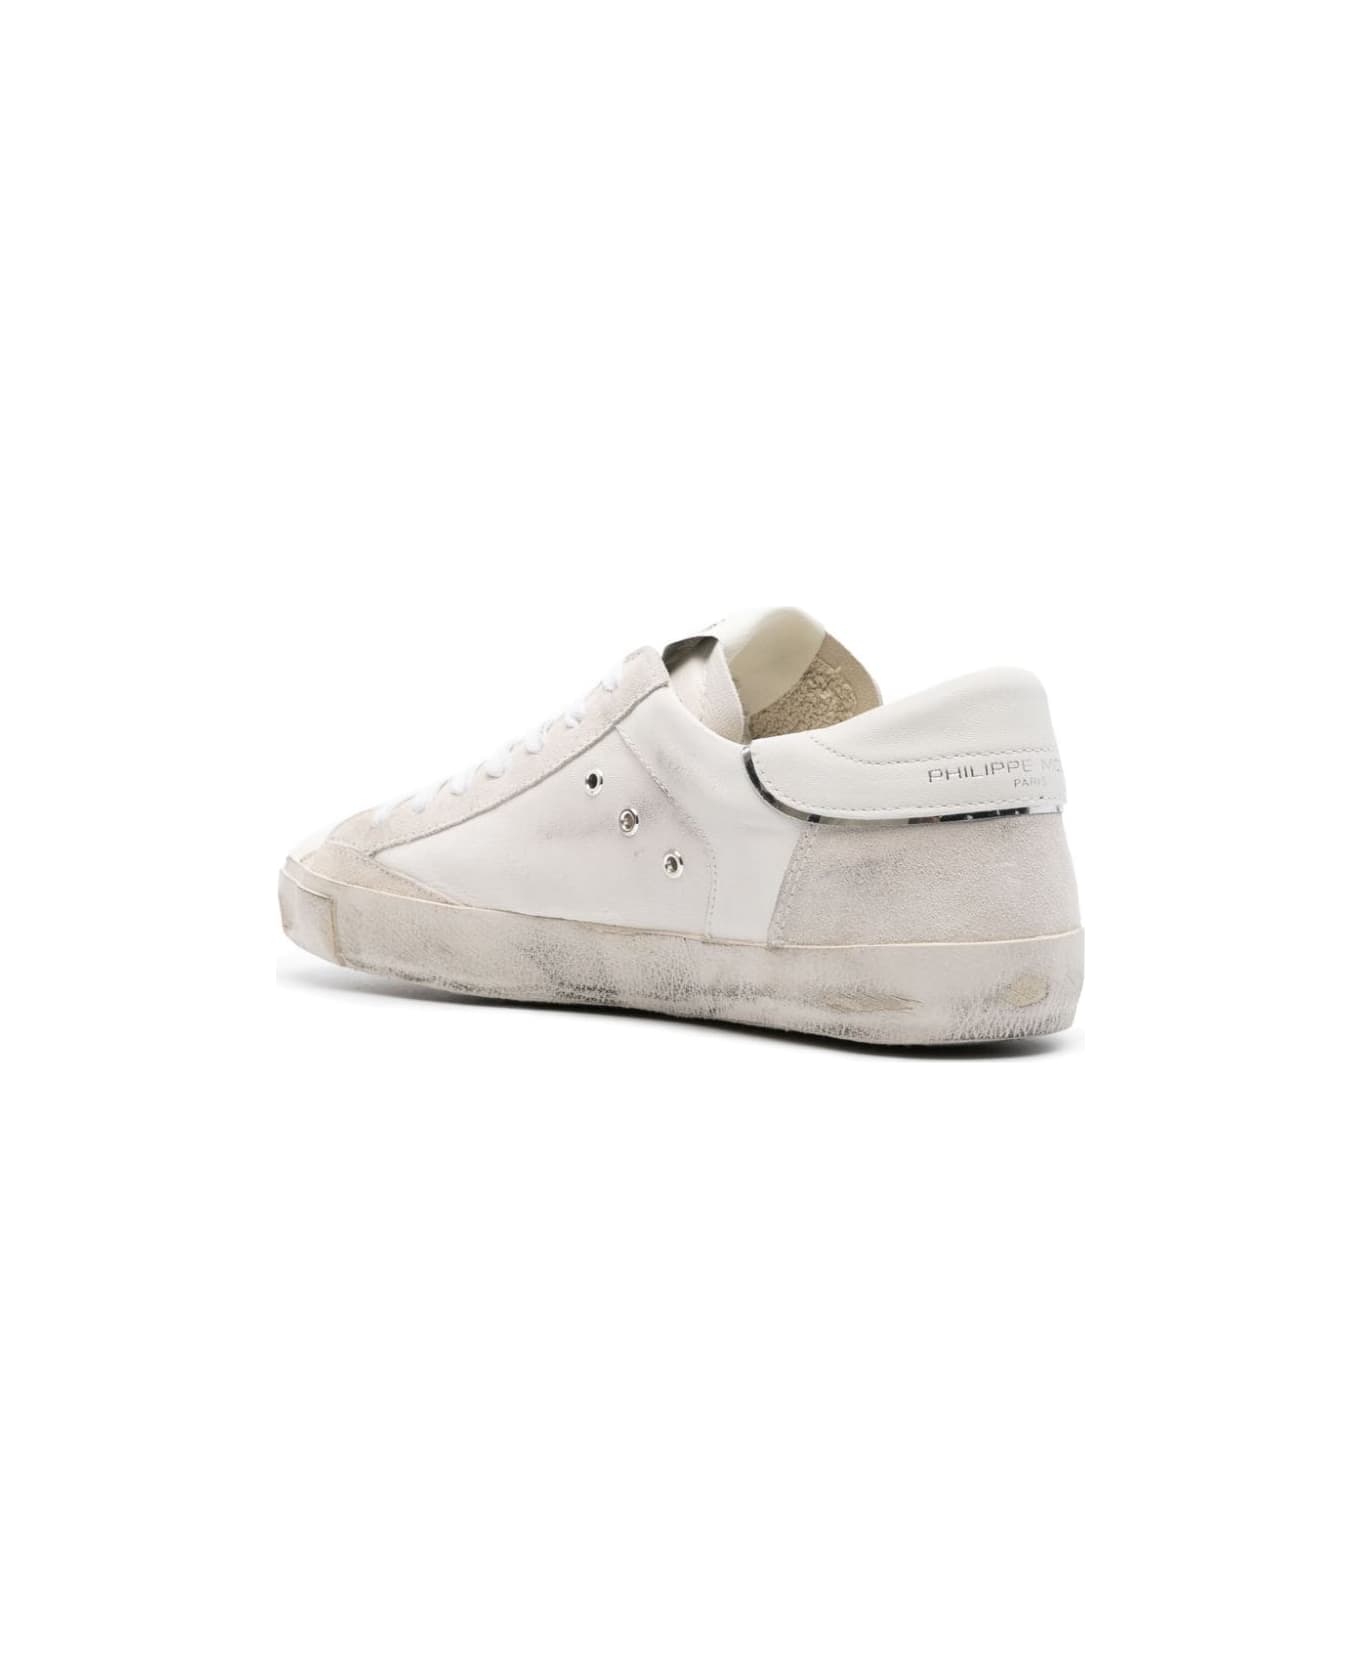 Philippe Model Prsx Low Sneakers - White - White